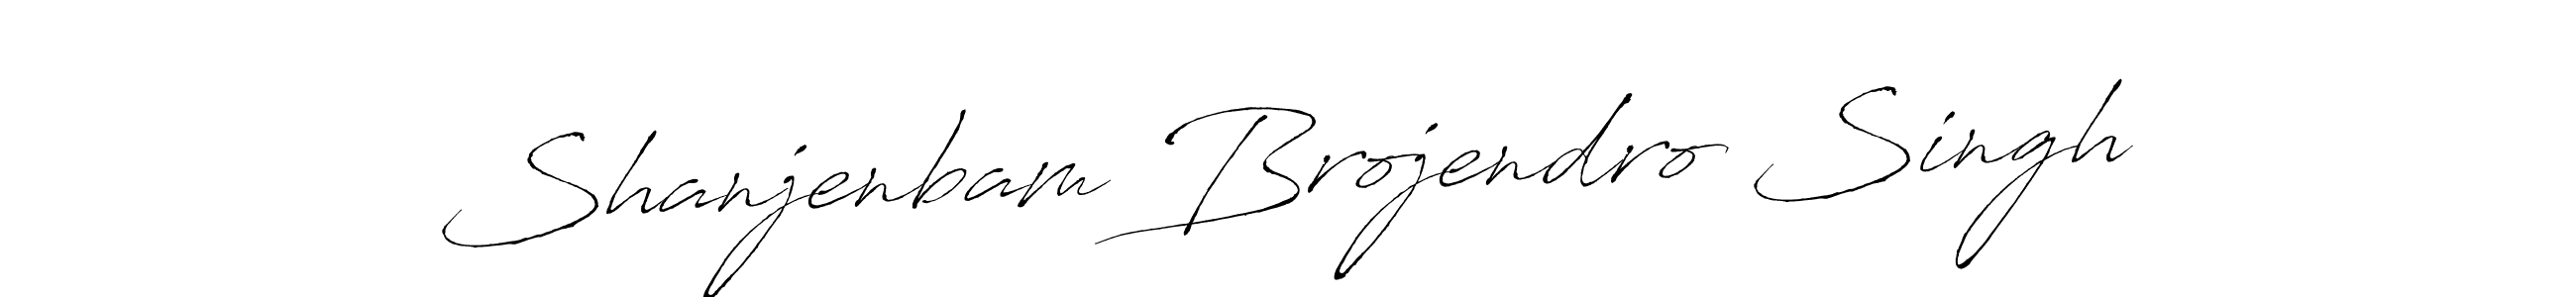 Shanjenbam Brojendro Singh stylish signature style. Best Handwritten Sign (Antro_Vectra) for my name. Handwritten Signature Collection Ideas for my name Shanjenbam Brojendro Singh. Shanjenbam Brojendro Singh signature style 6 images and pictures png